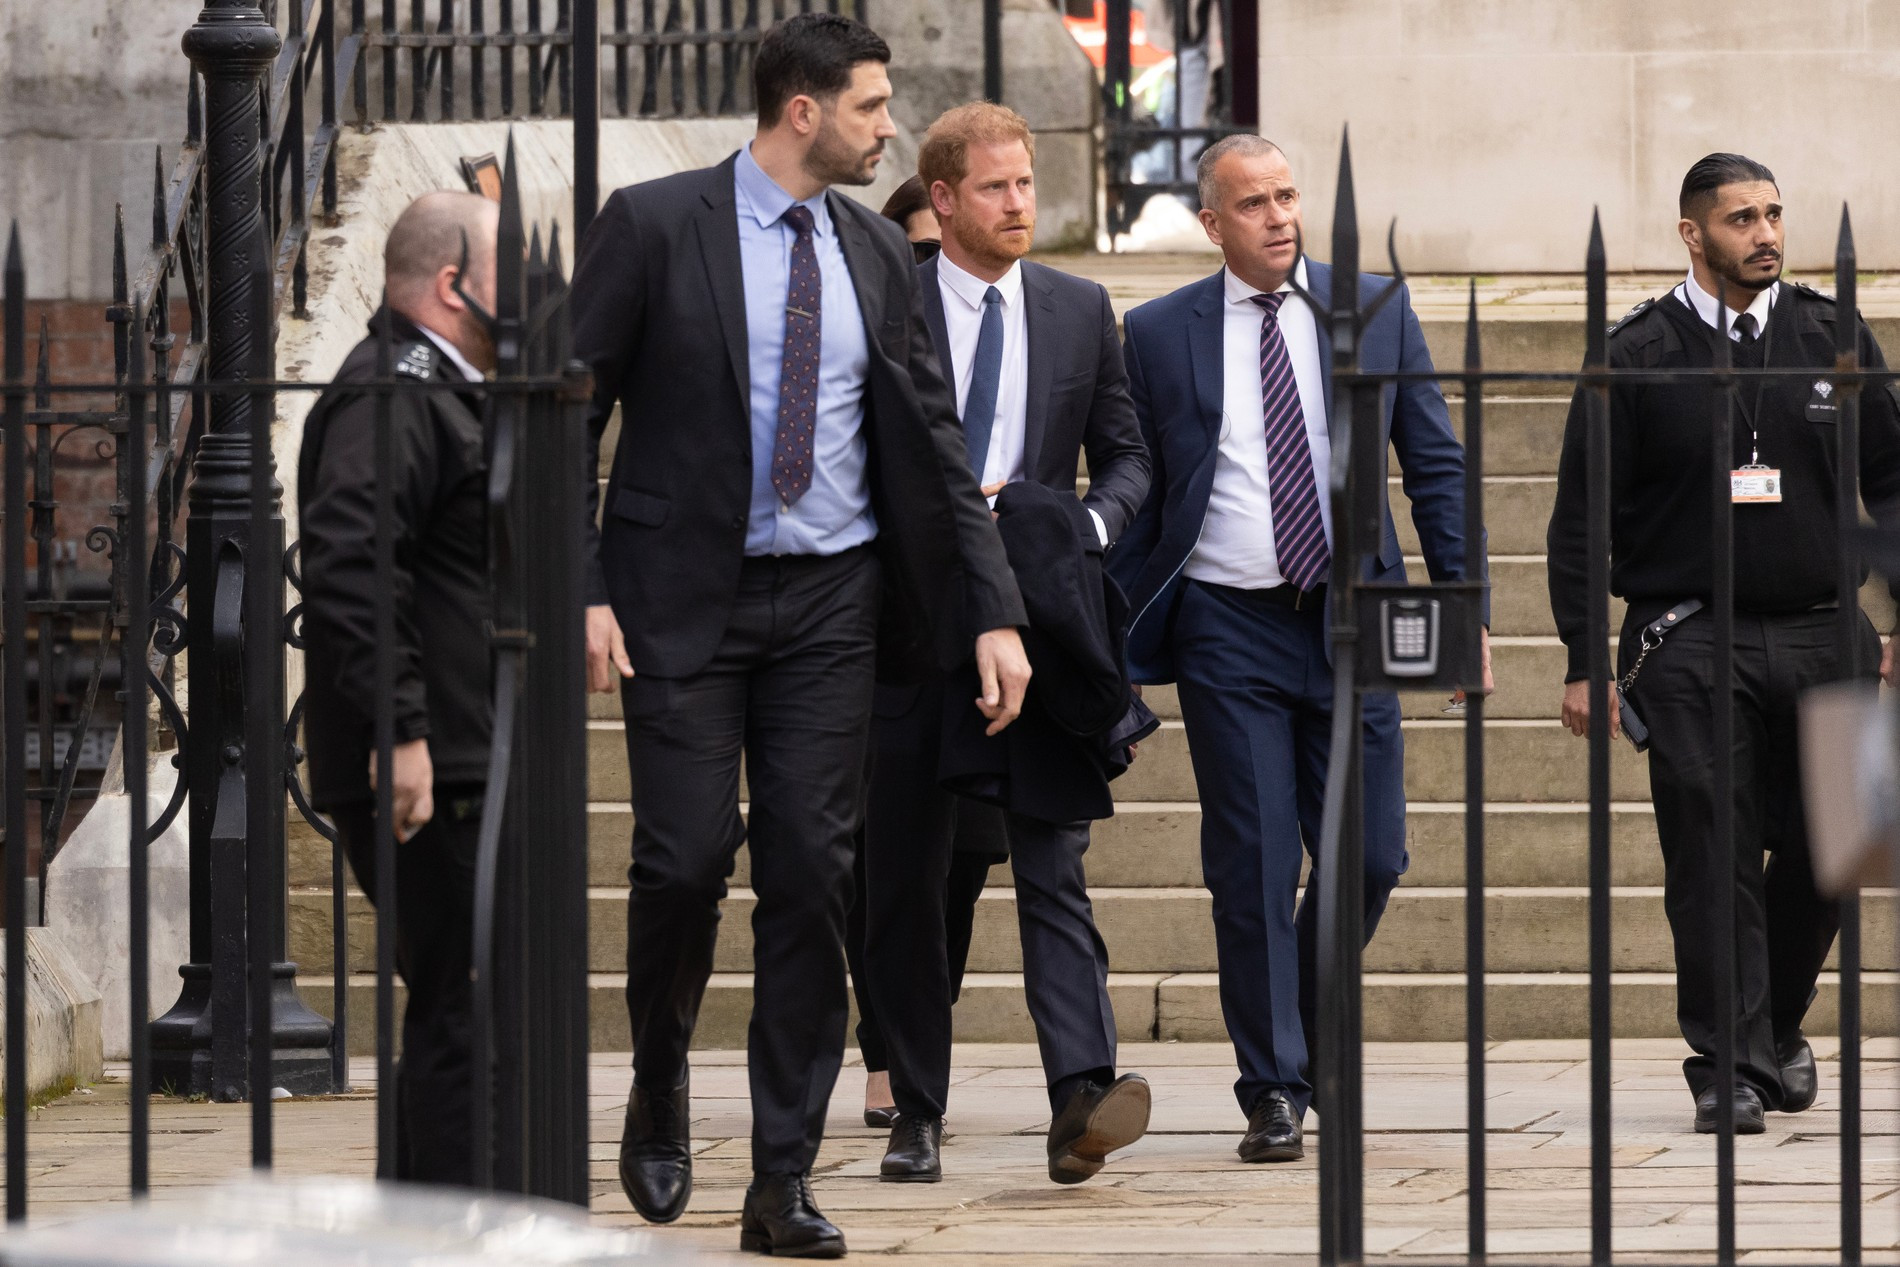 Принц Гарри приехал в суд в Лондоне
Фото: Getty Images